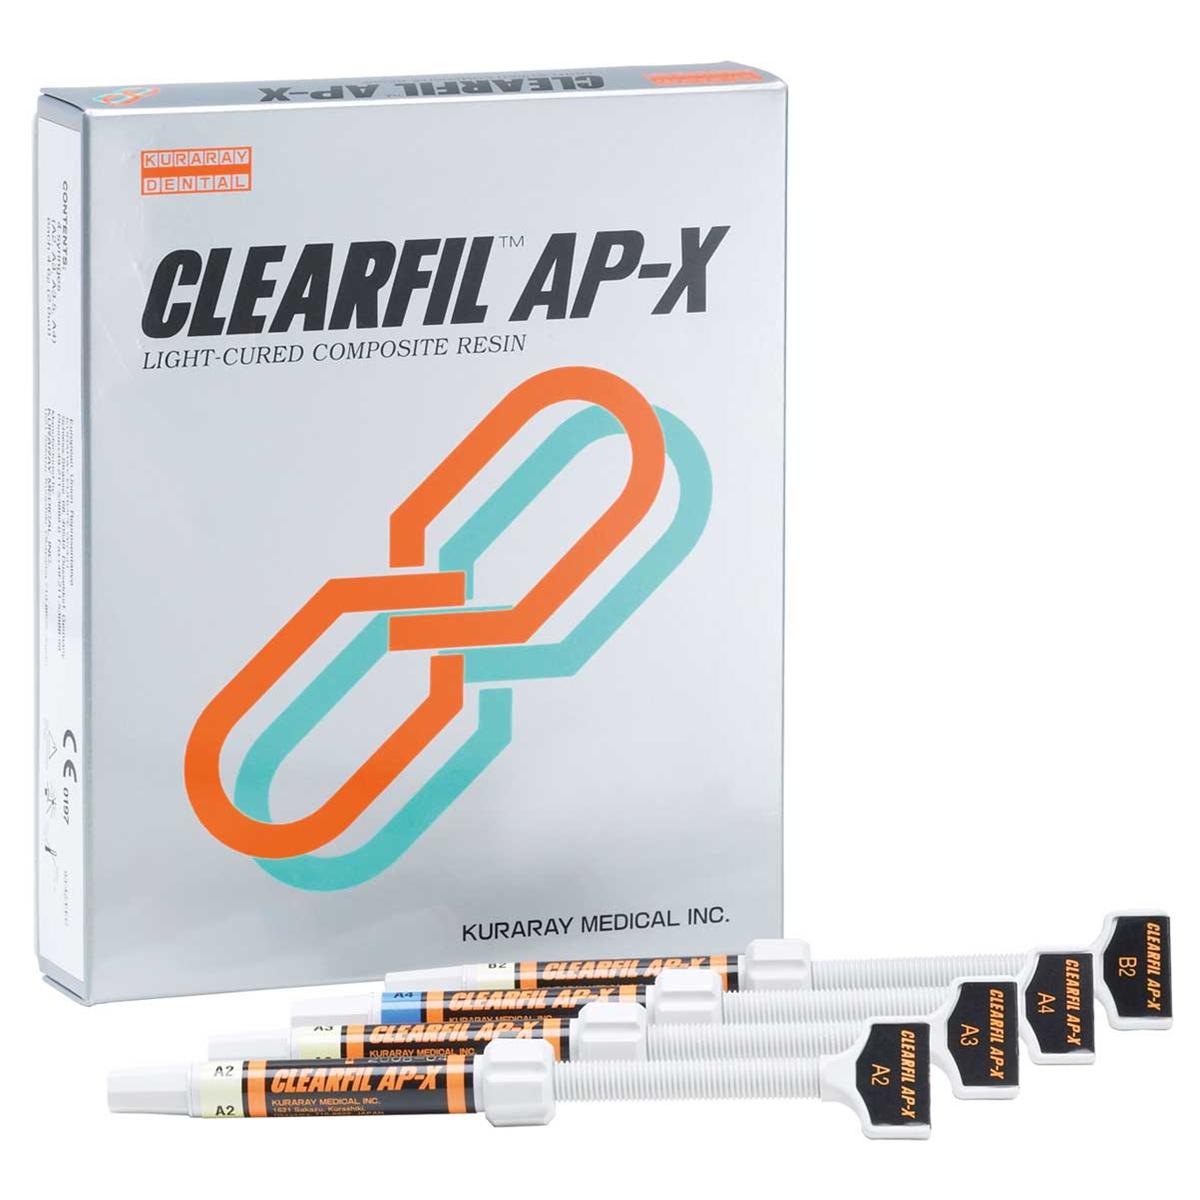 Clearfil AP-X: Syringe A2, 4.6 g, kuraray #1721KA